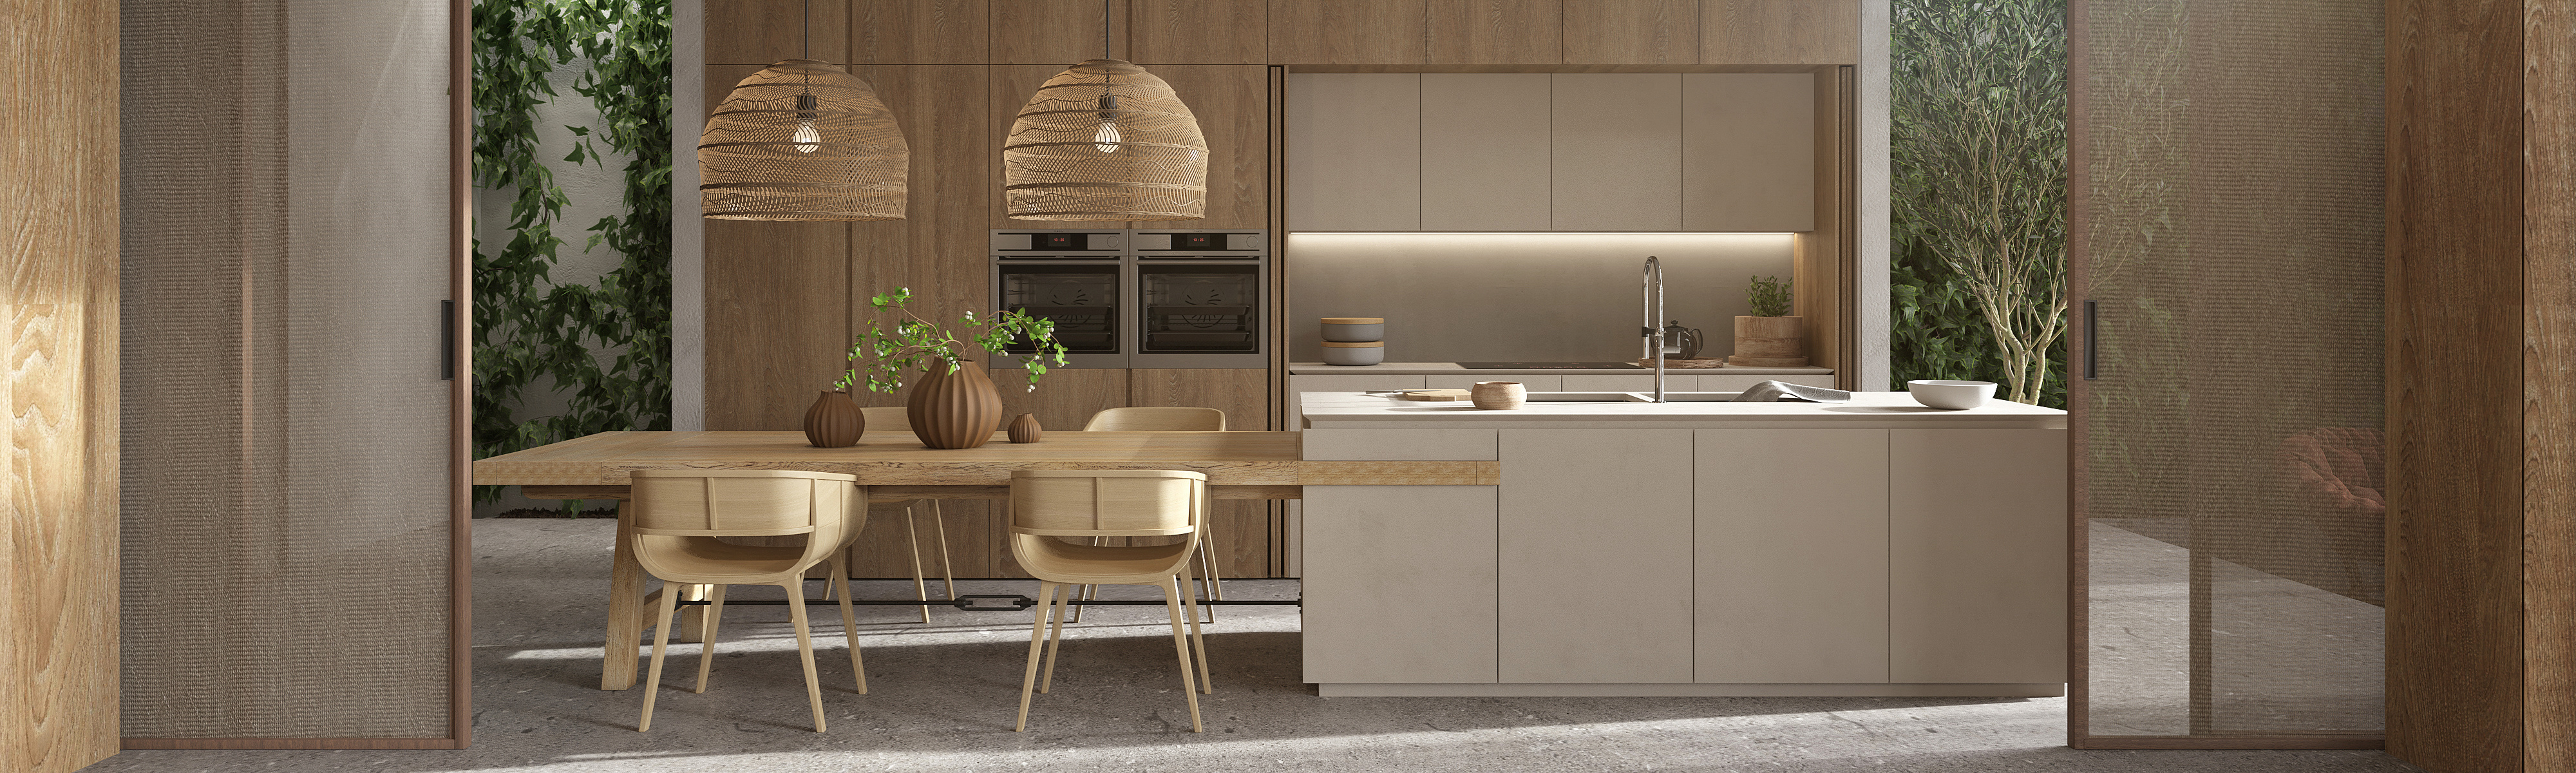 Modern interior  scandinavian design kitchen and dining